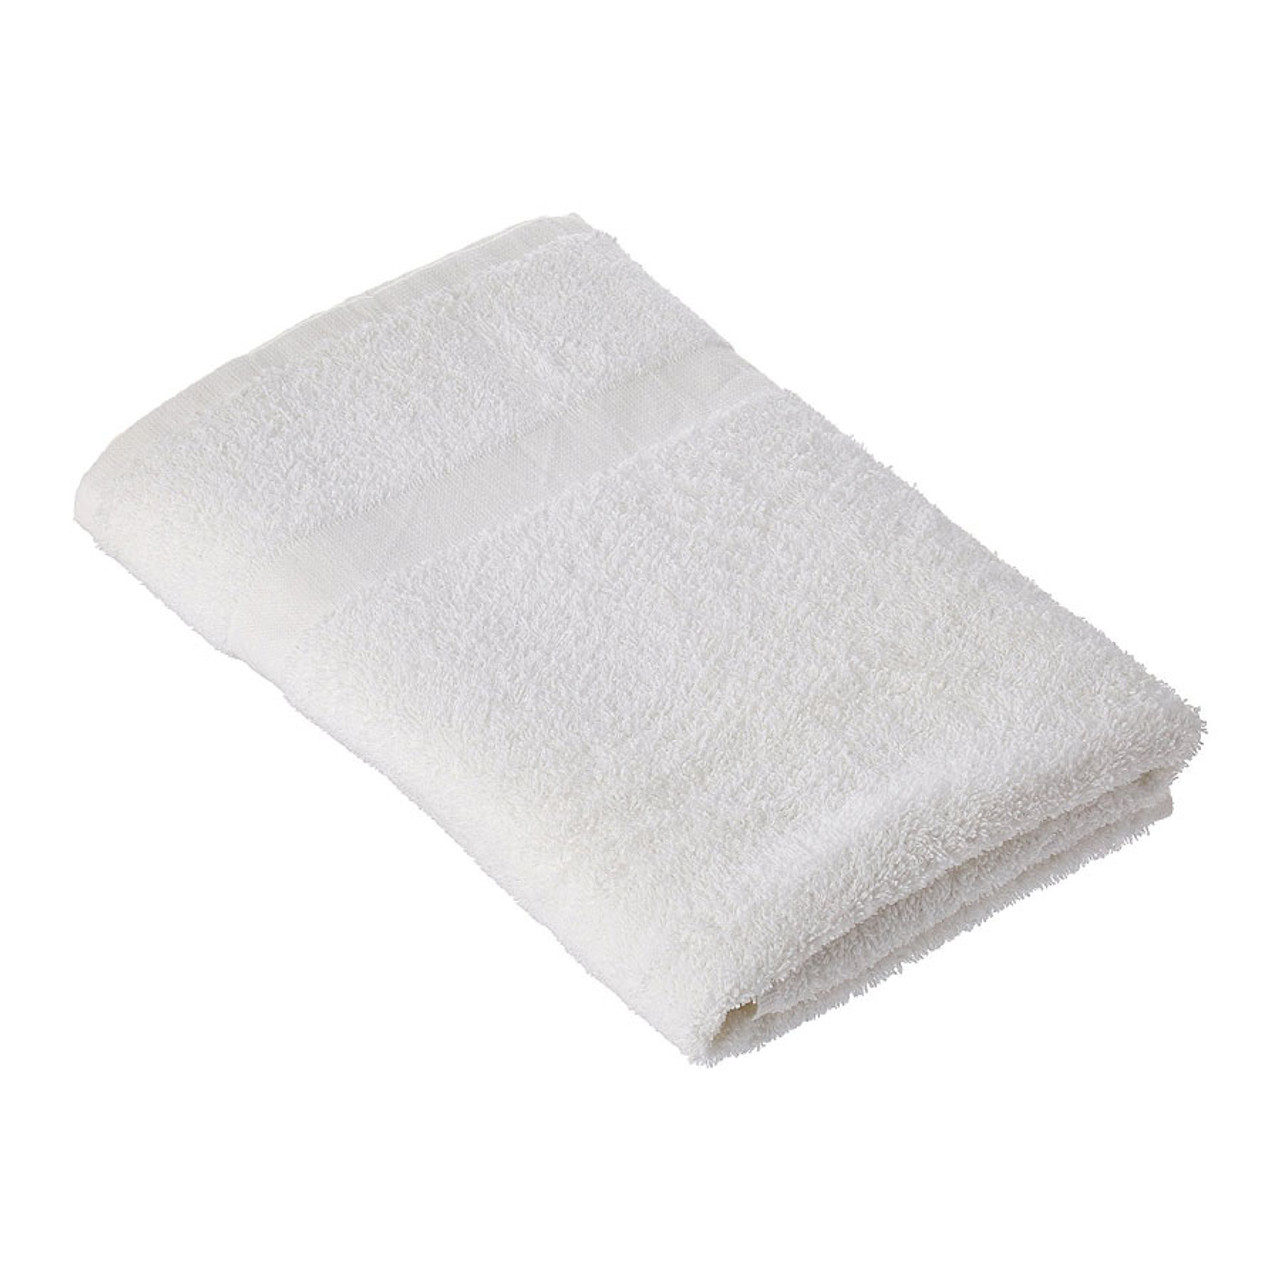 TOWEL HAND ECONOSOFT WHITE